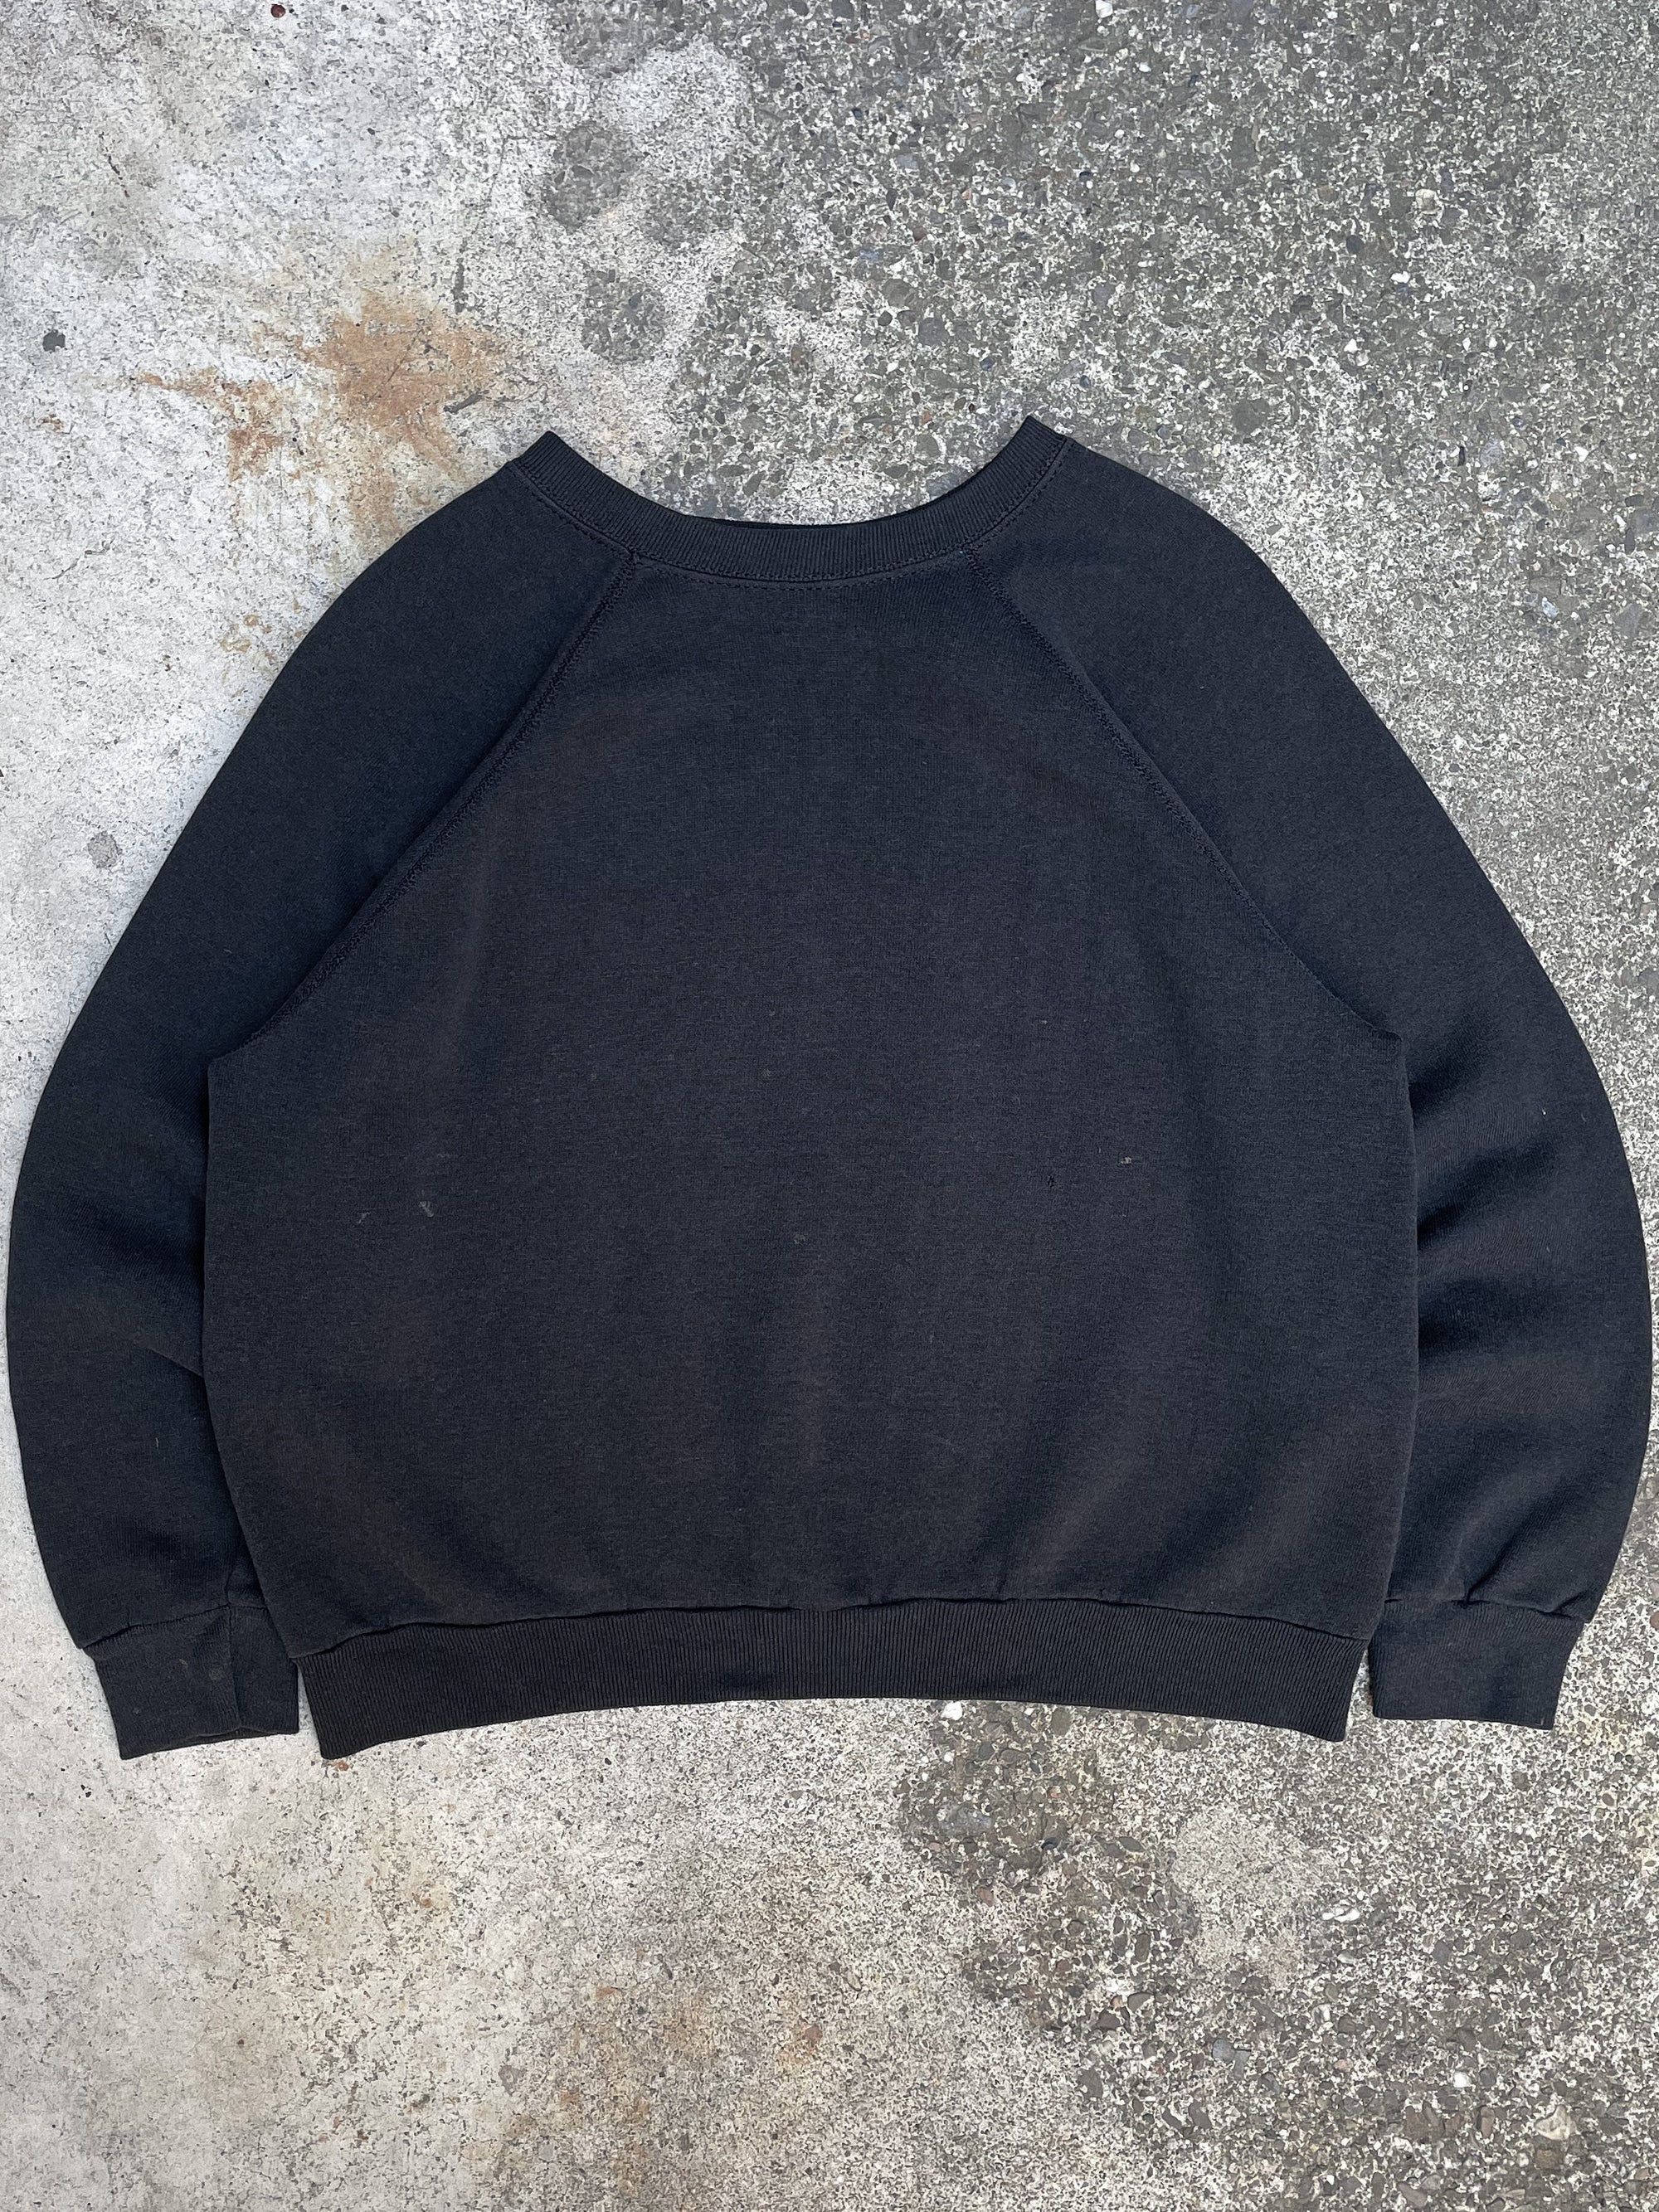 1980s Black Blank Raglan Sweatshirt (M)